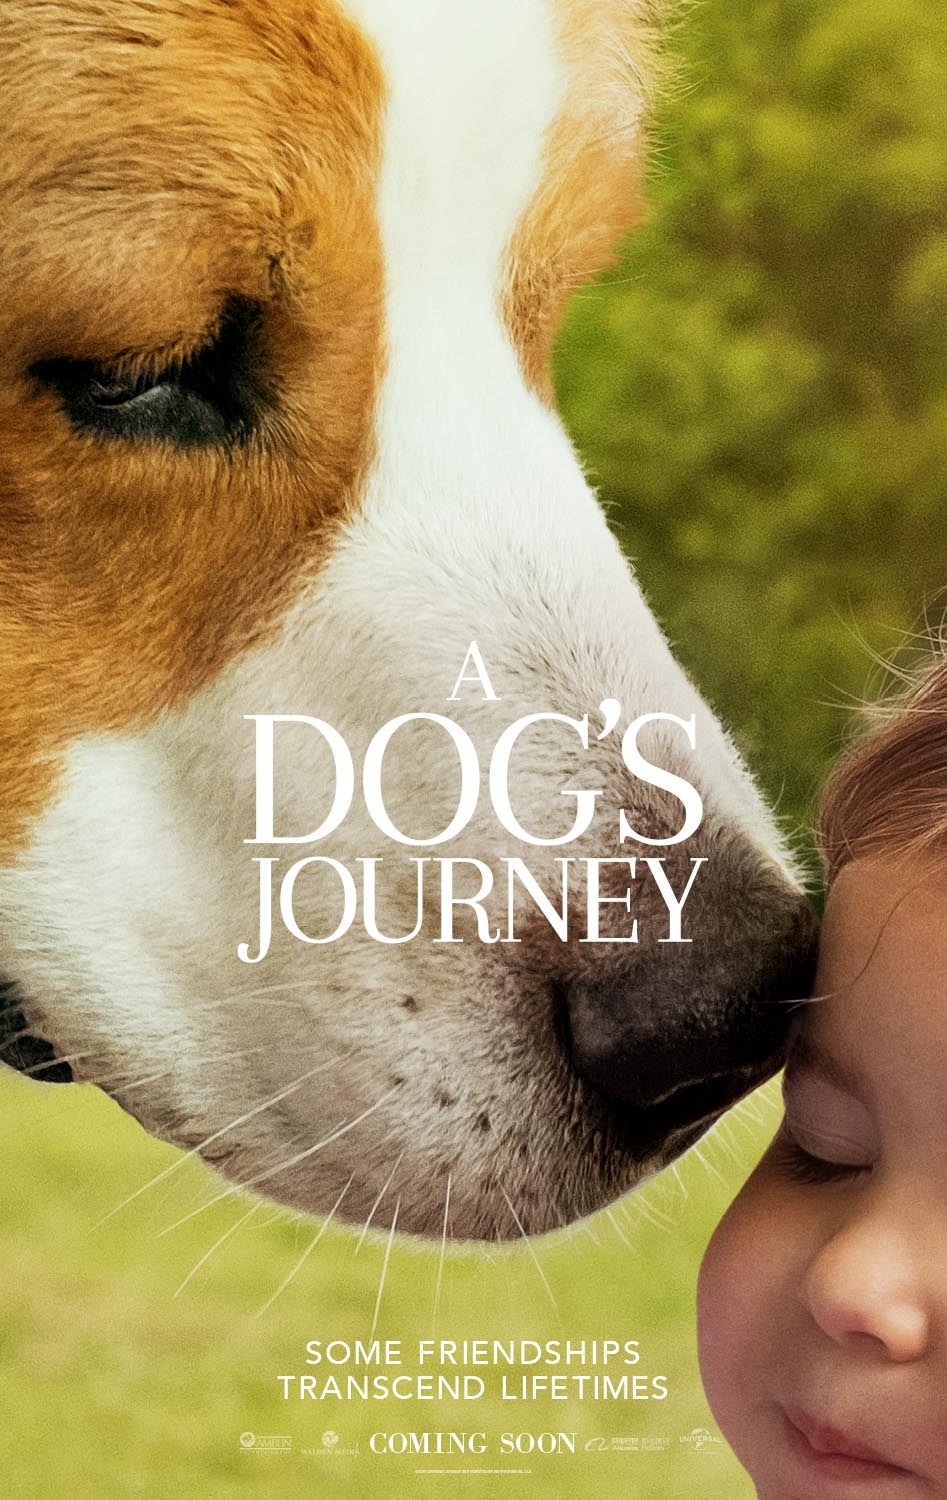 a dog's journey clips